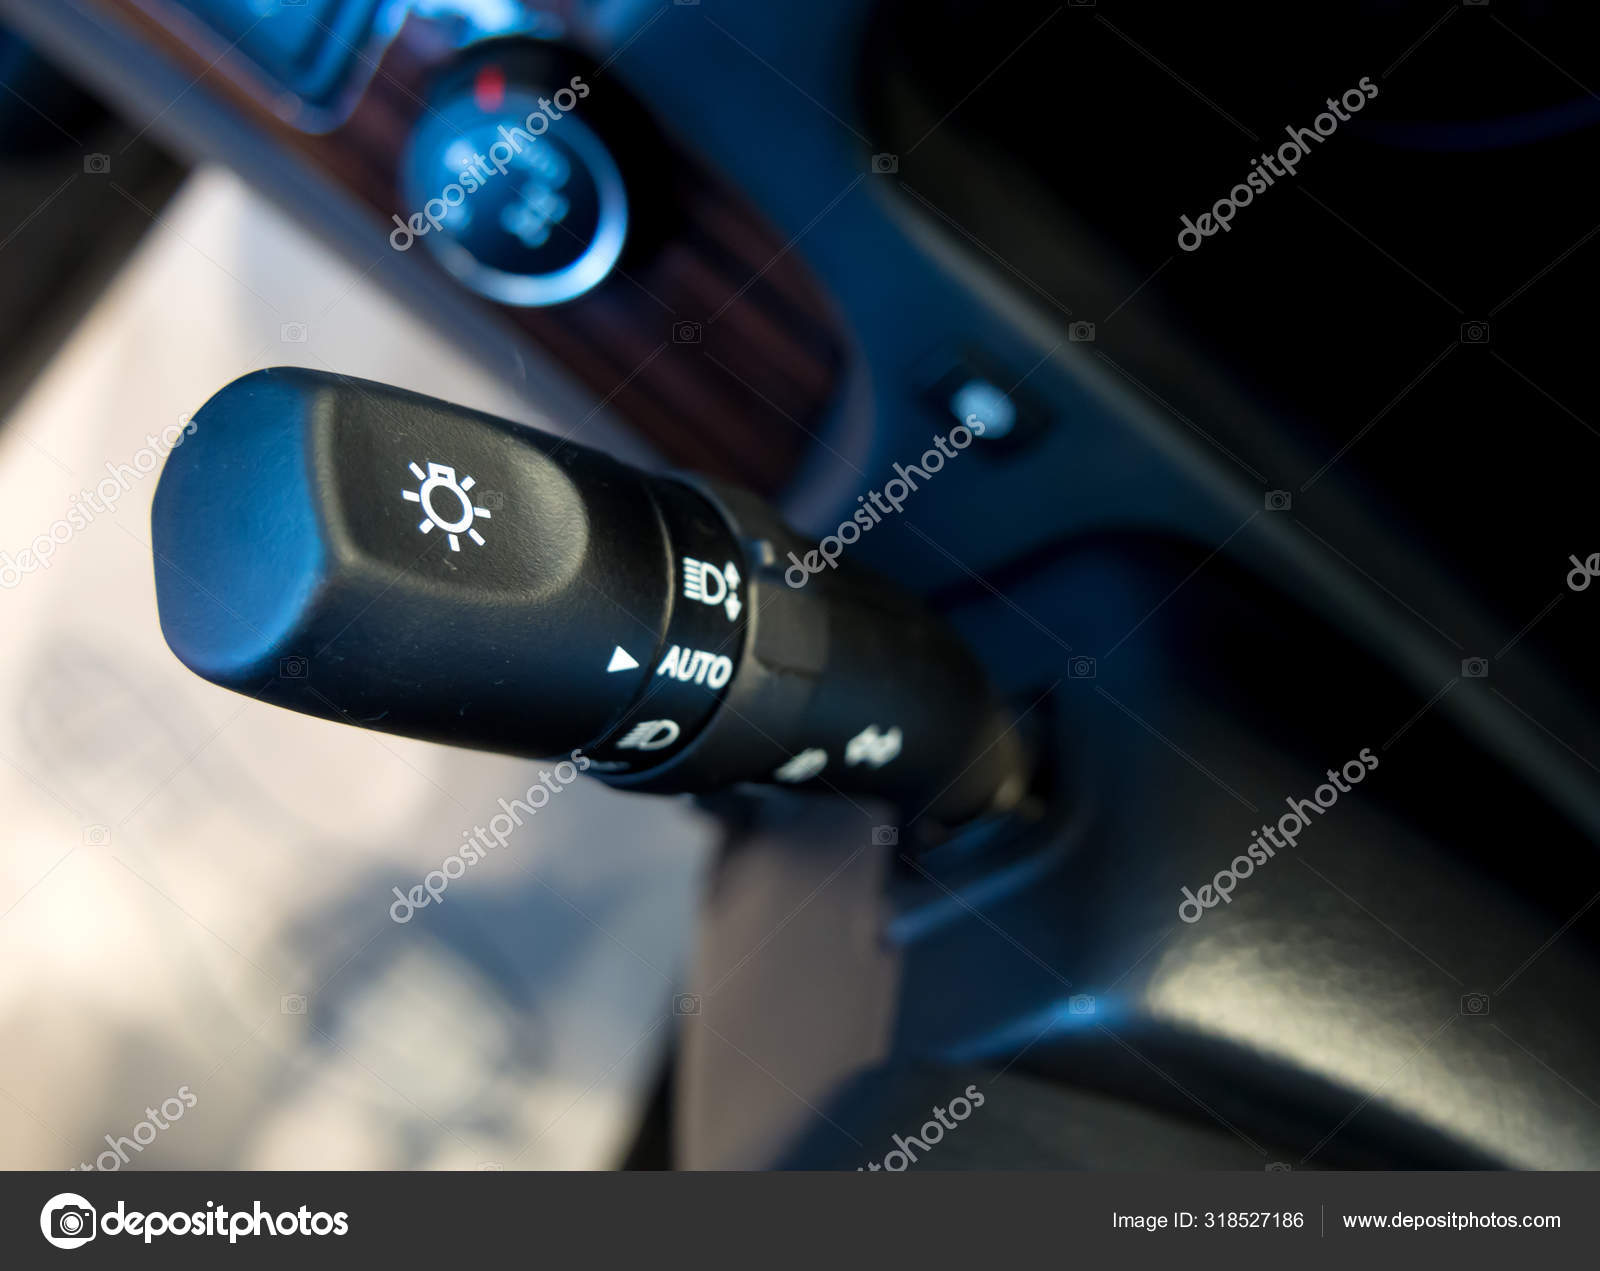 https://st3.depositphotos.com/6712124/31852/i/1600/depositphotos_318527186-stock-photo-steering-column-switch-car-headlight.jpg